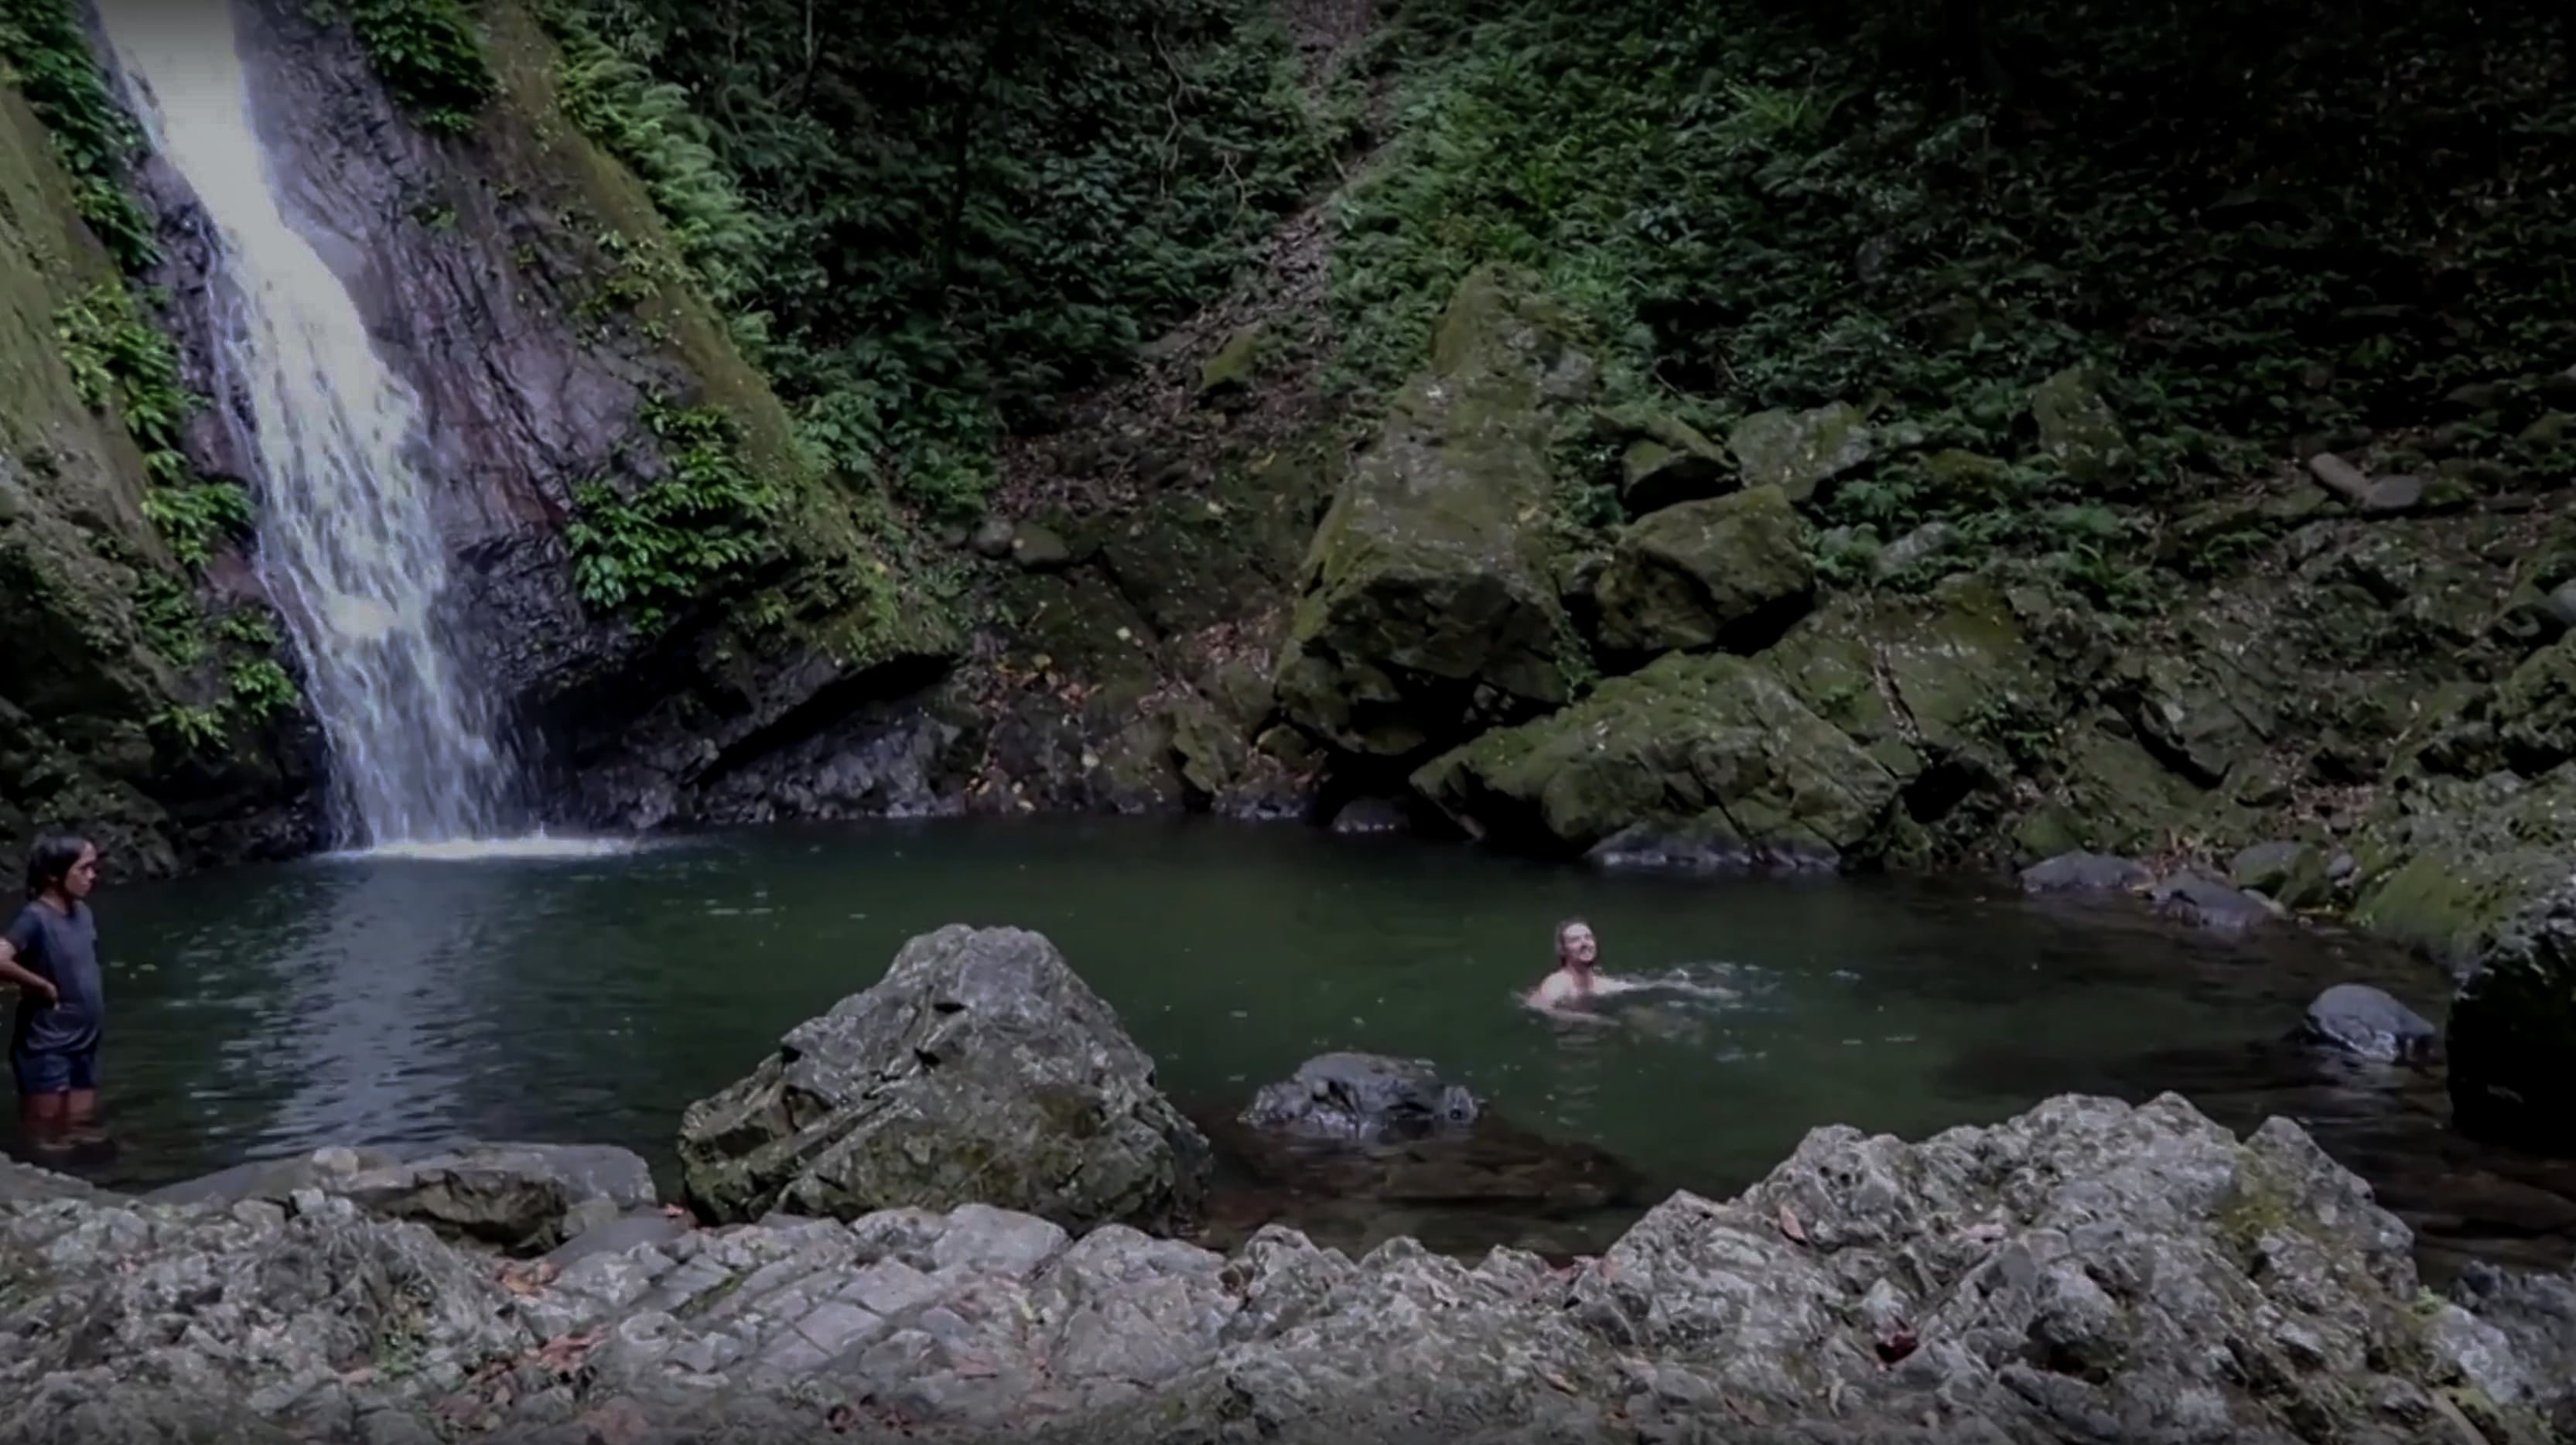 lenny through paradise swimming in the basin of water of kabigan falls in pagudpud ilocos norte philippines